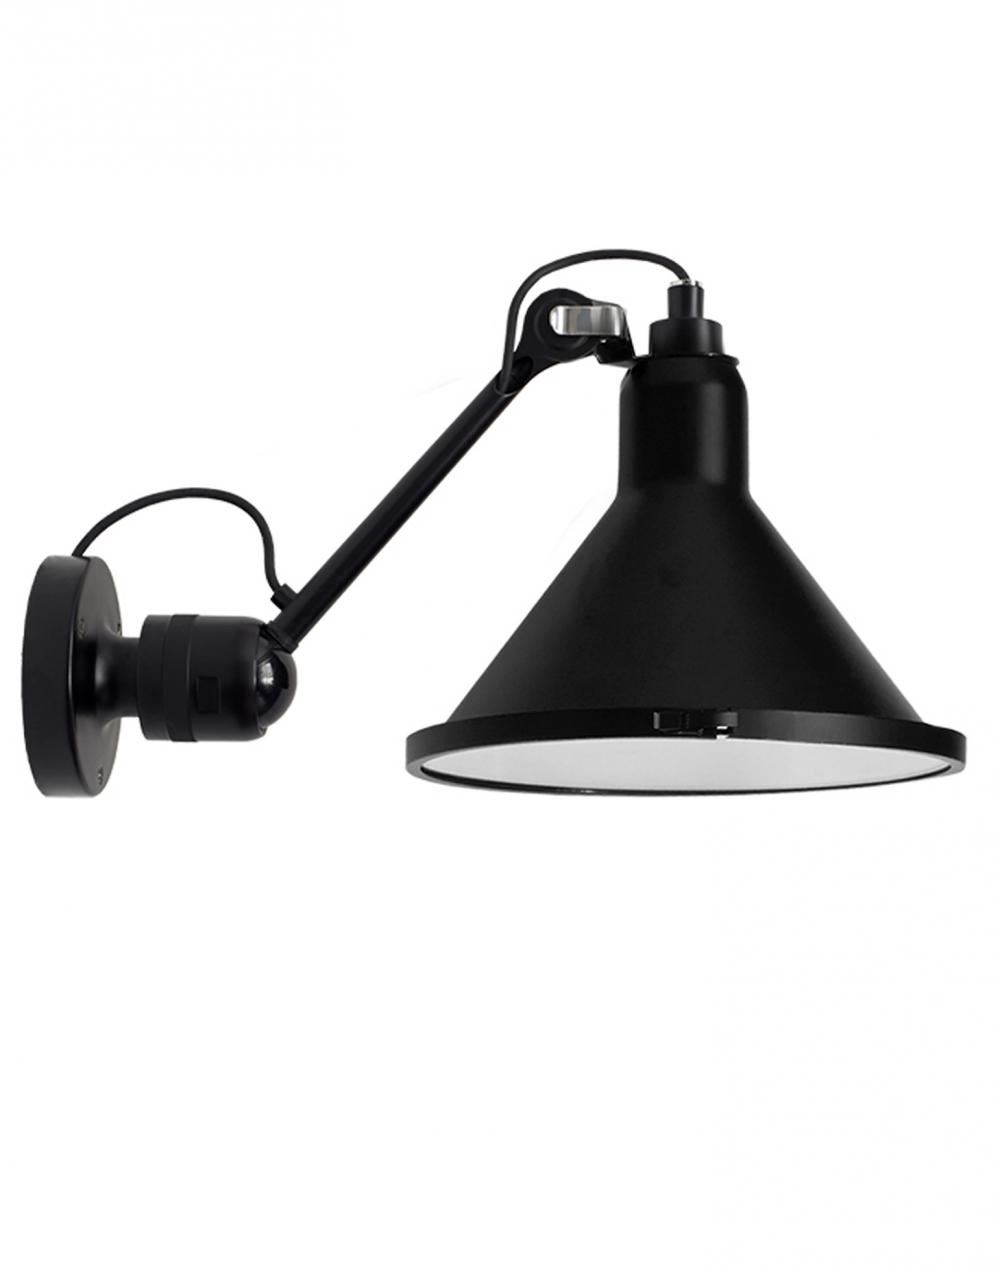 Lampe Gras 304 Xl Outdoor Wall Light Black Arm Black Shade Conic